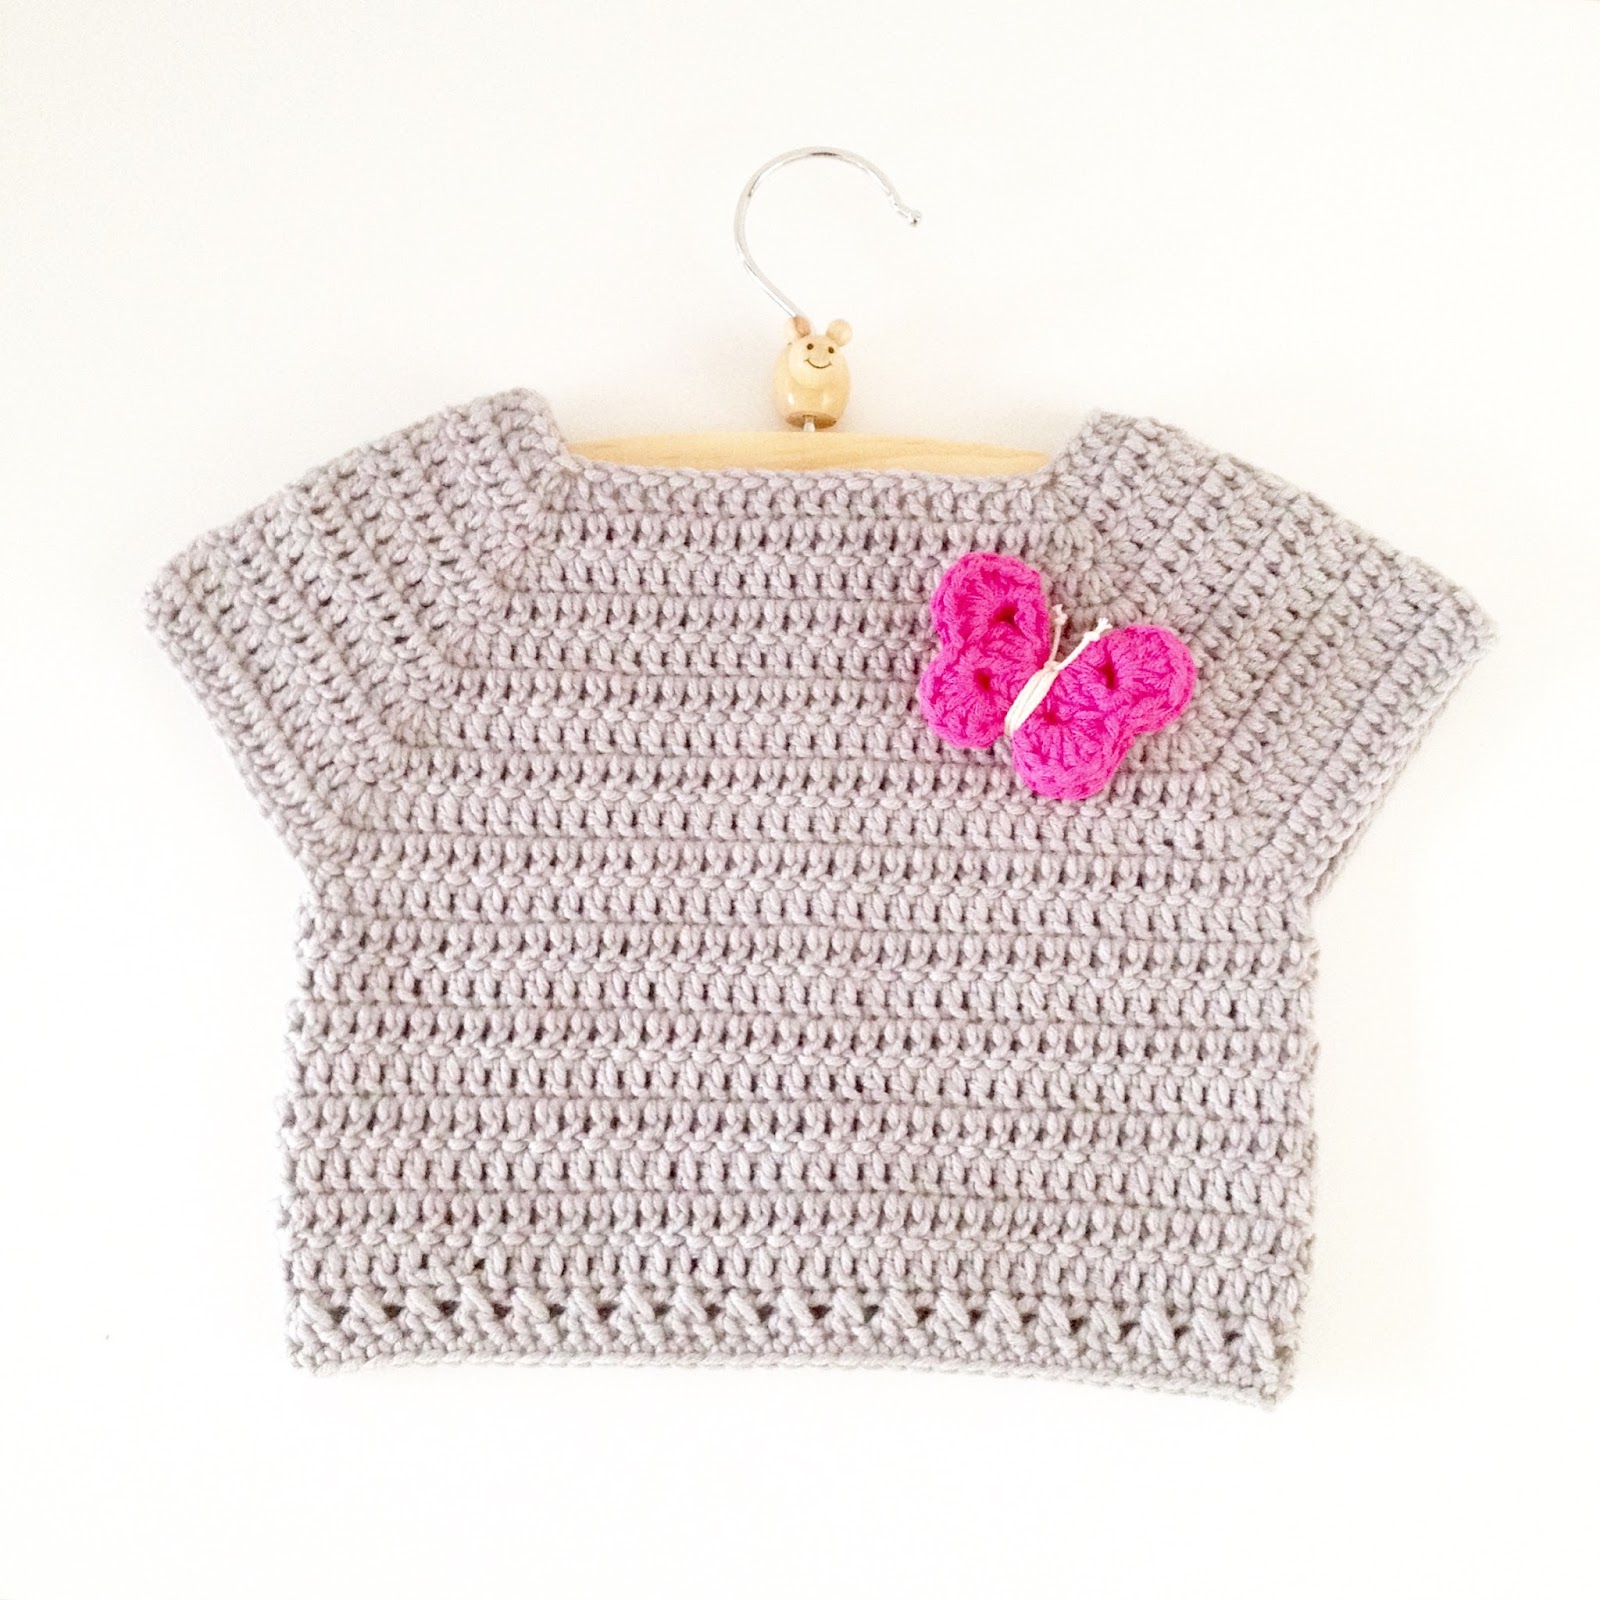 Annemarie's Haakblog: Crochet Toddler Shirt - Free Pattern